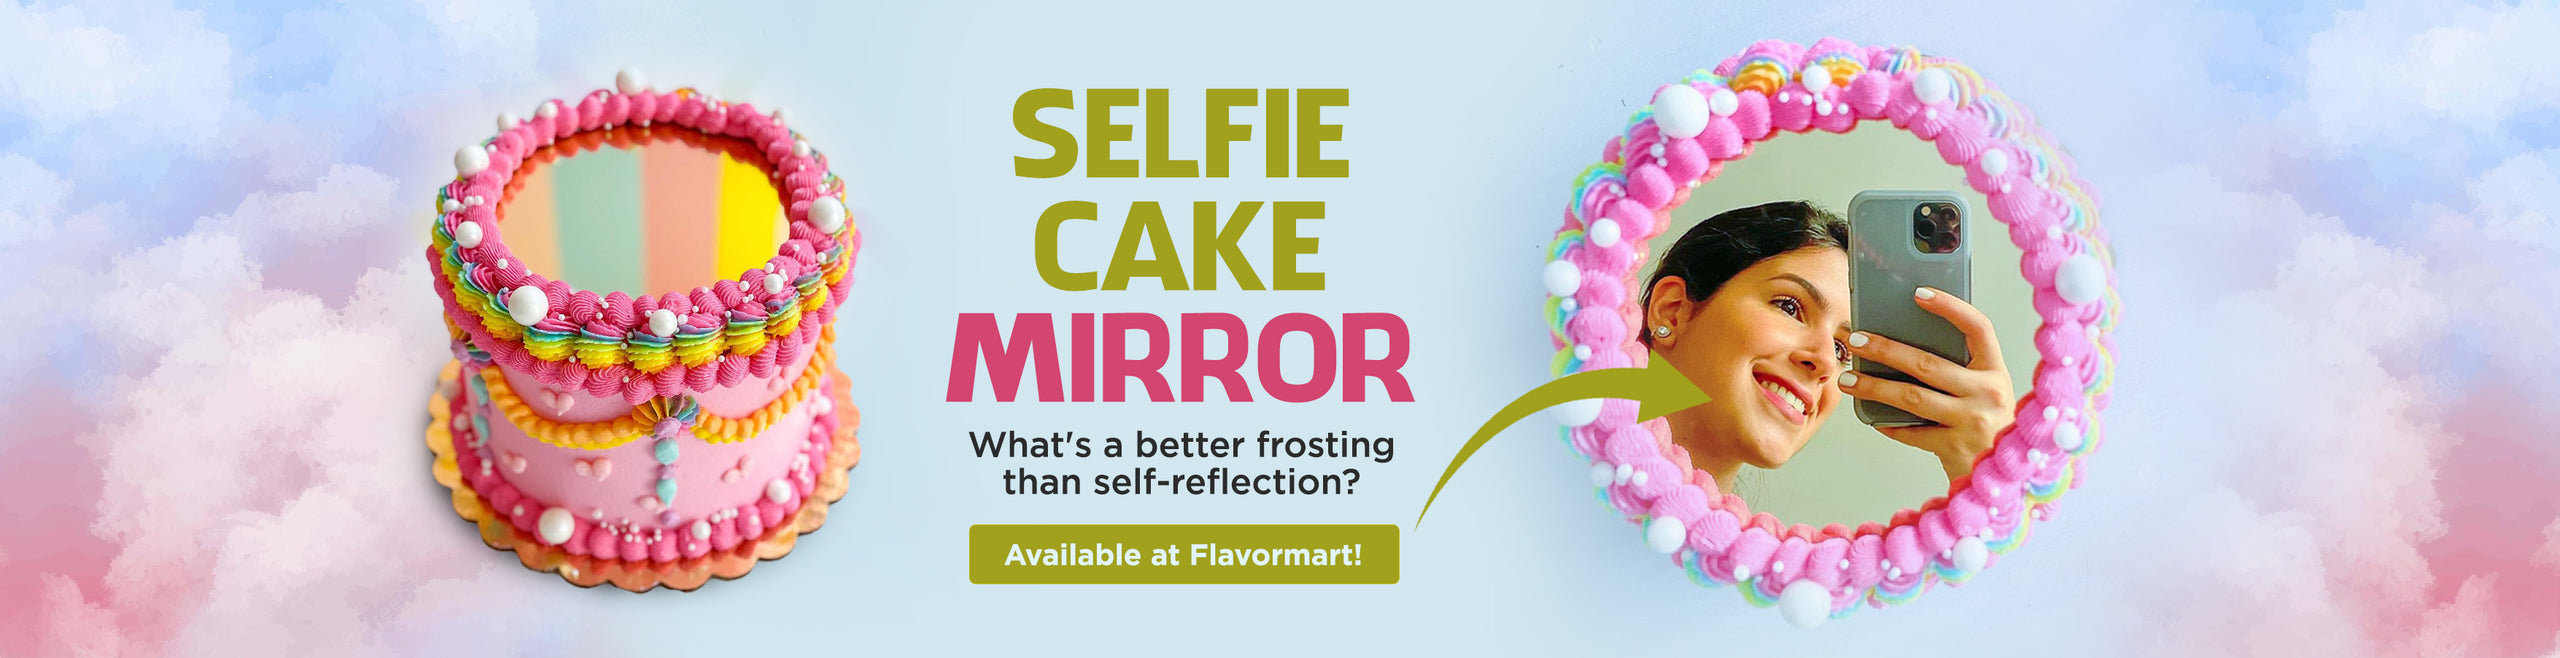 selfie cake mirror topper